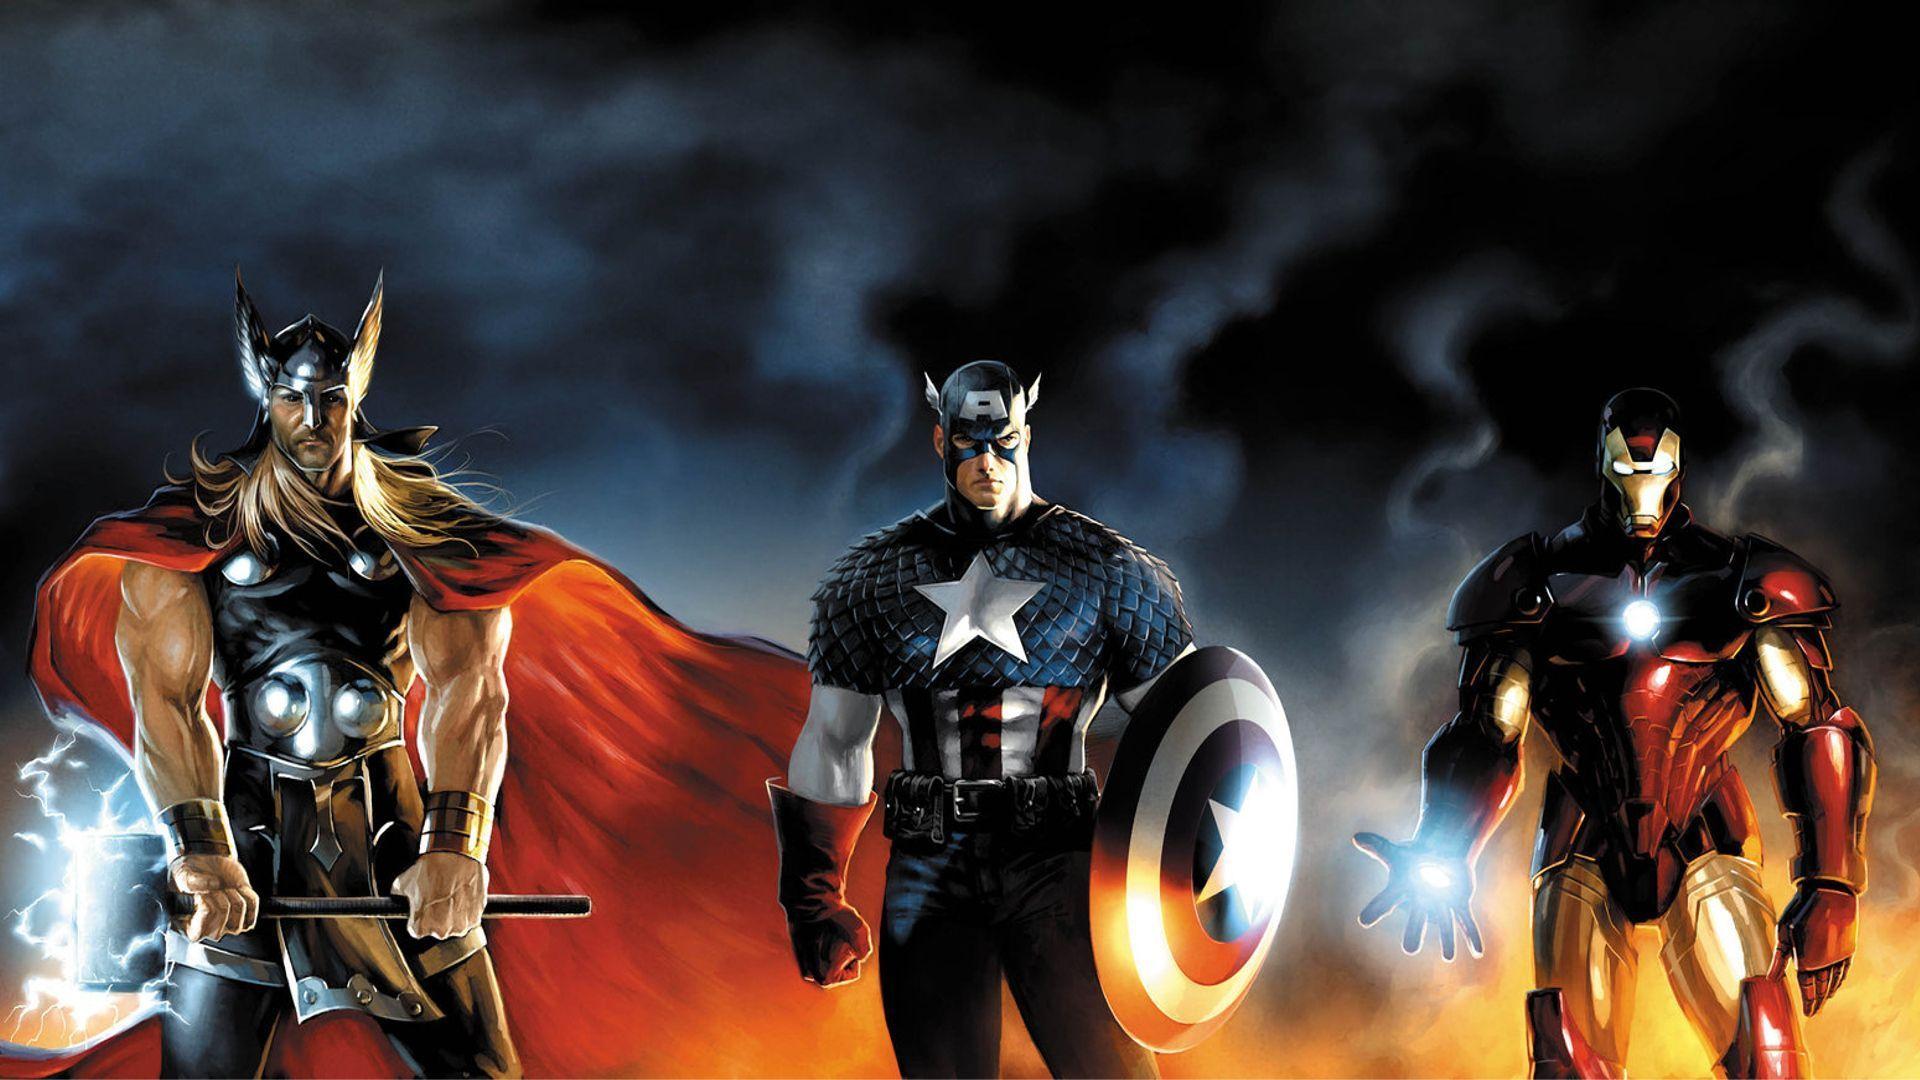 Marvel Avengers HD Wallpaper Download High 1920x1080PX Marvel